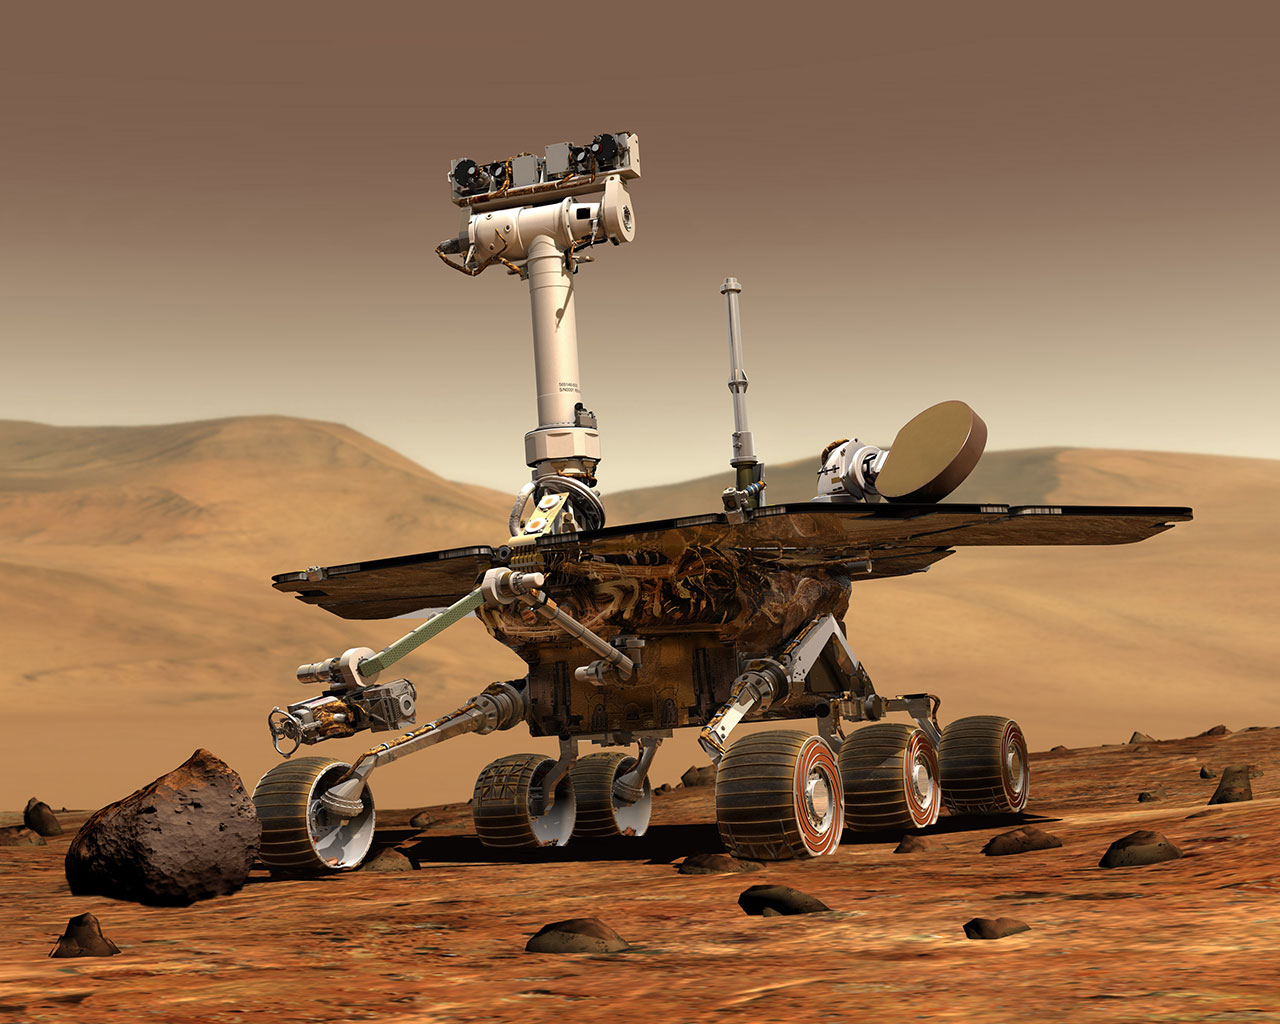 Keep on rovin’. An artist's portyal of NASA Mars Exploration Rover, Opportunity, on the surface of Mars. Photo credit: NASA/JPL/Cornell University